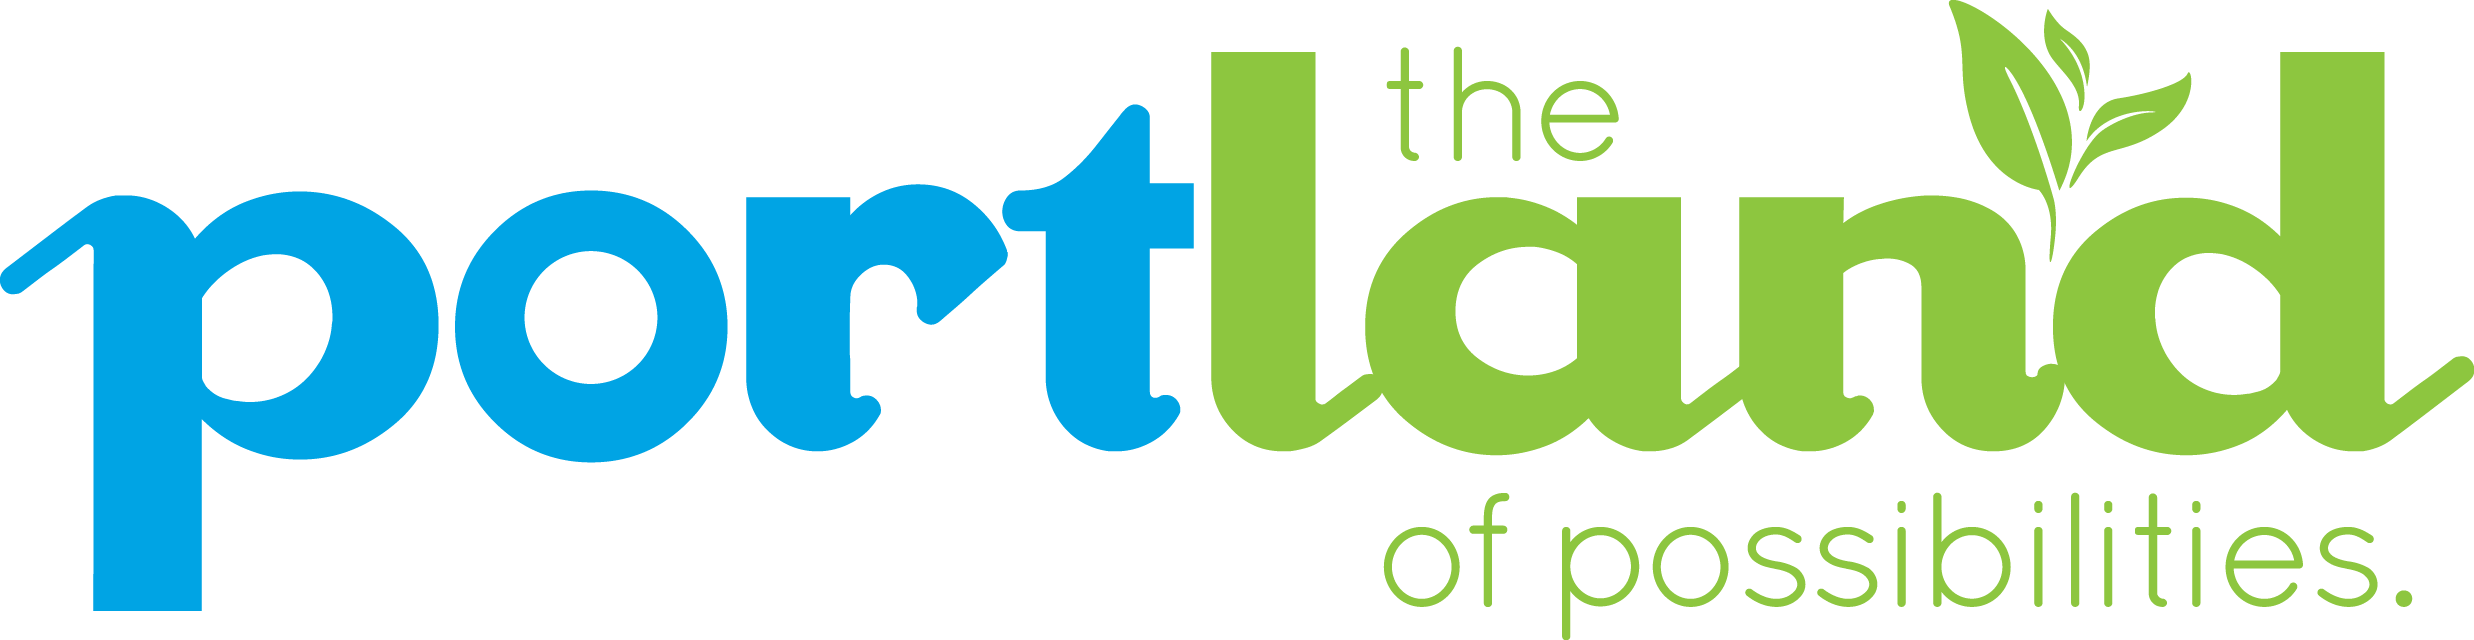 The portland logo